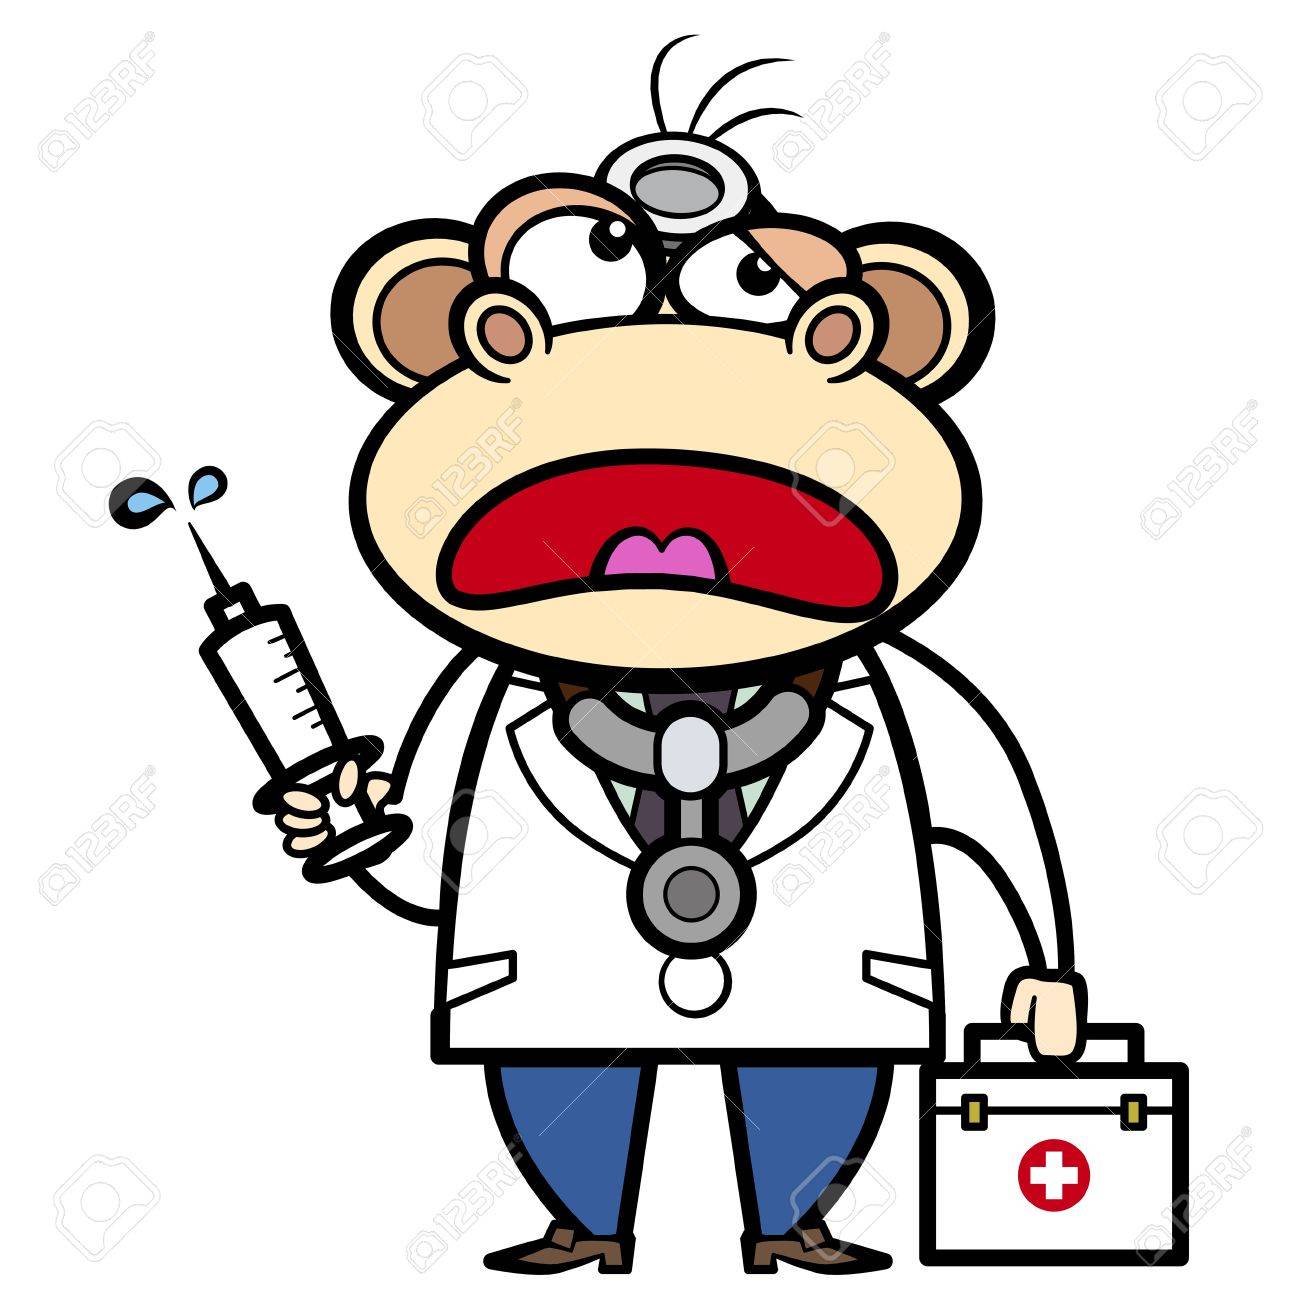 monkey clipart doctor